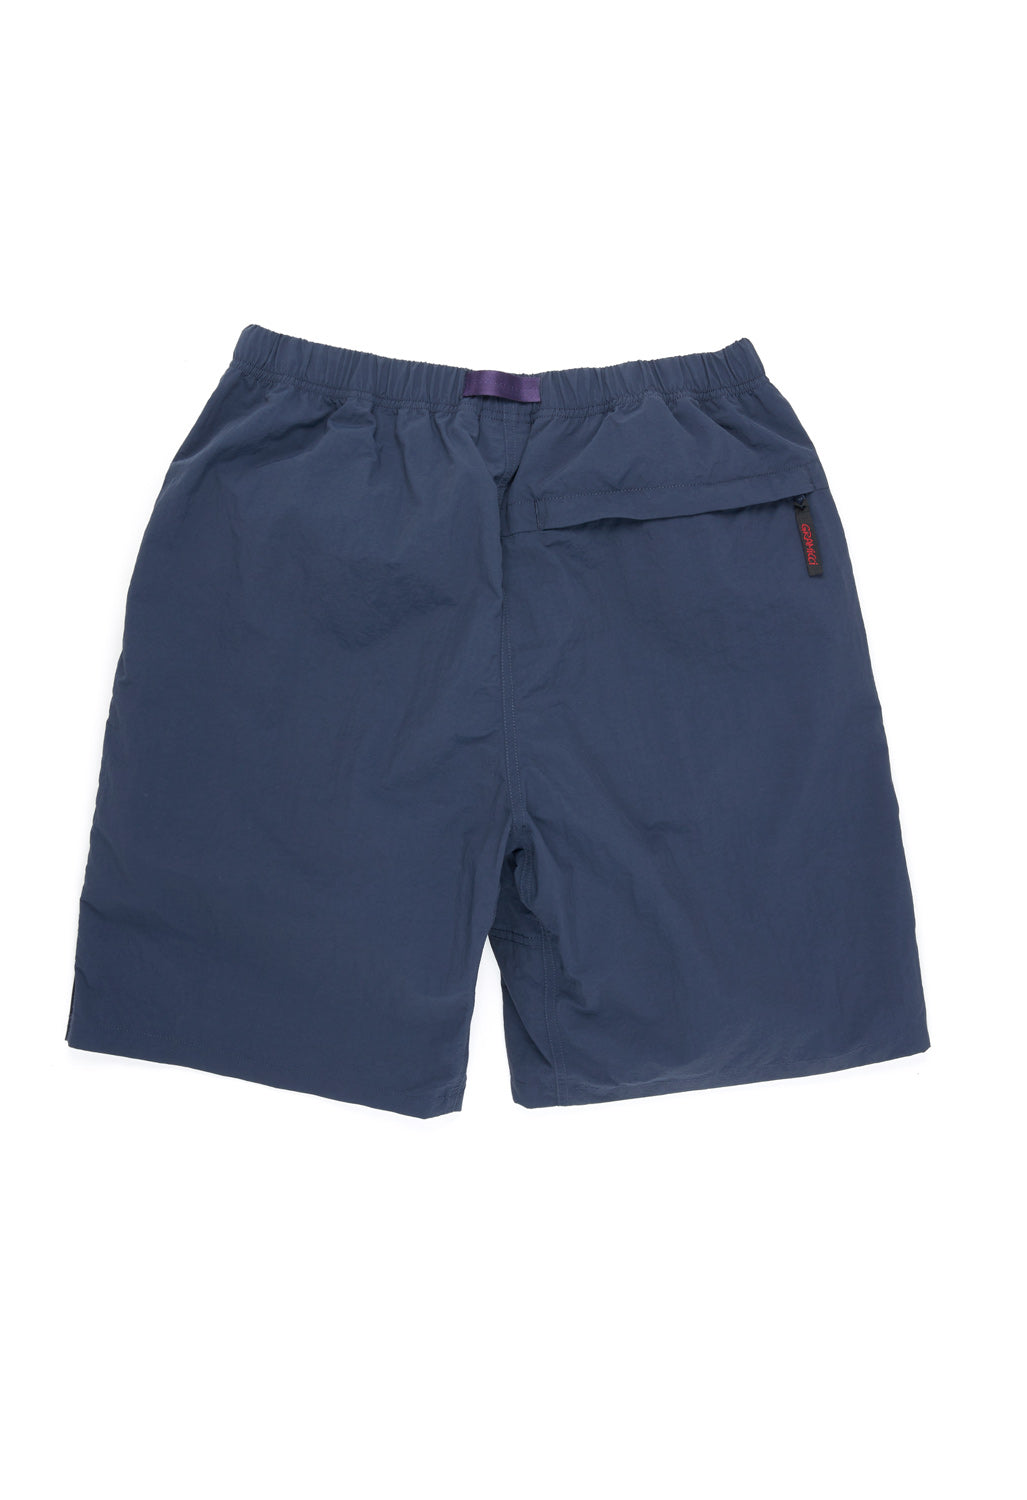 Gramicci Men's Nylon Packable G Shorts - Navy